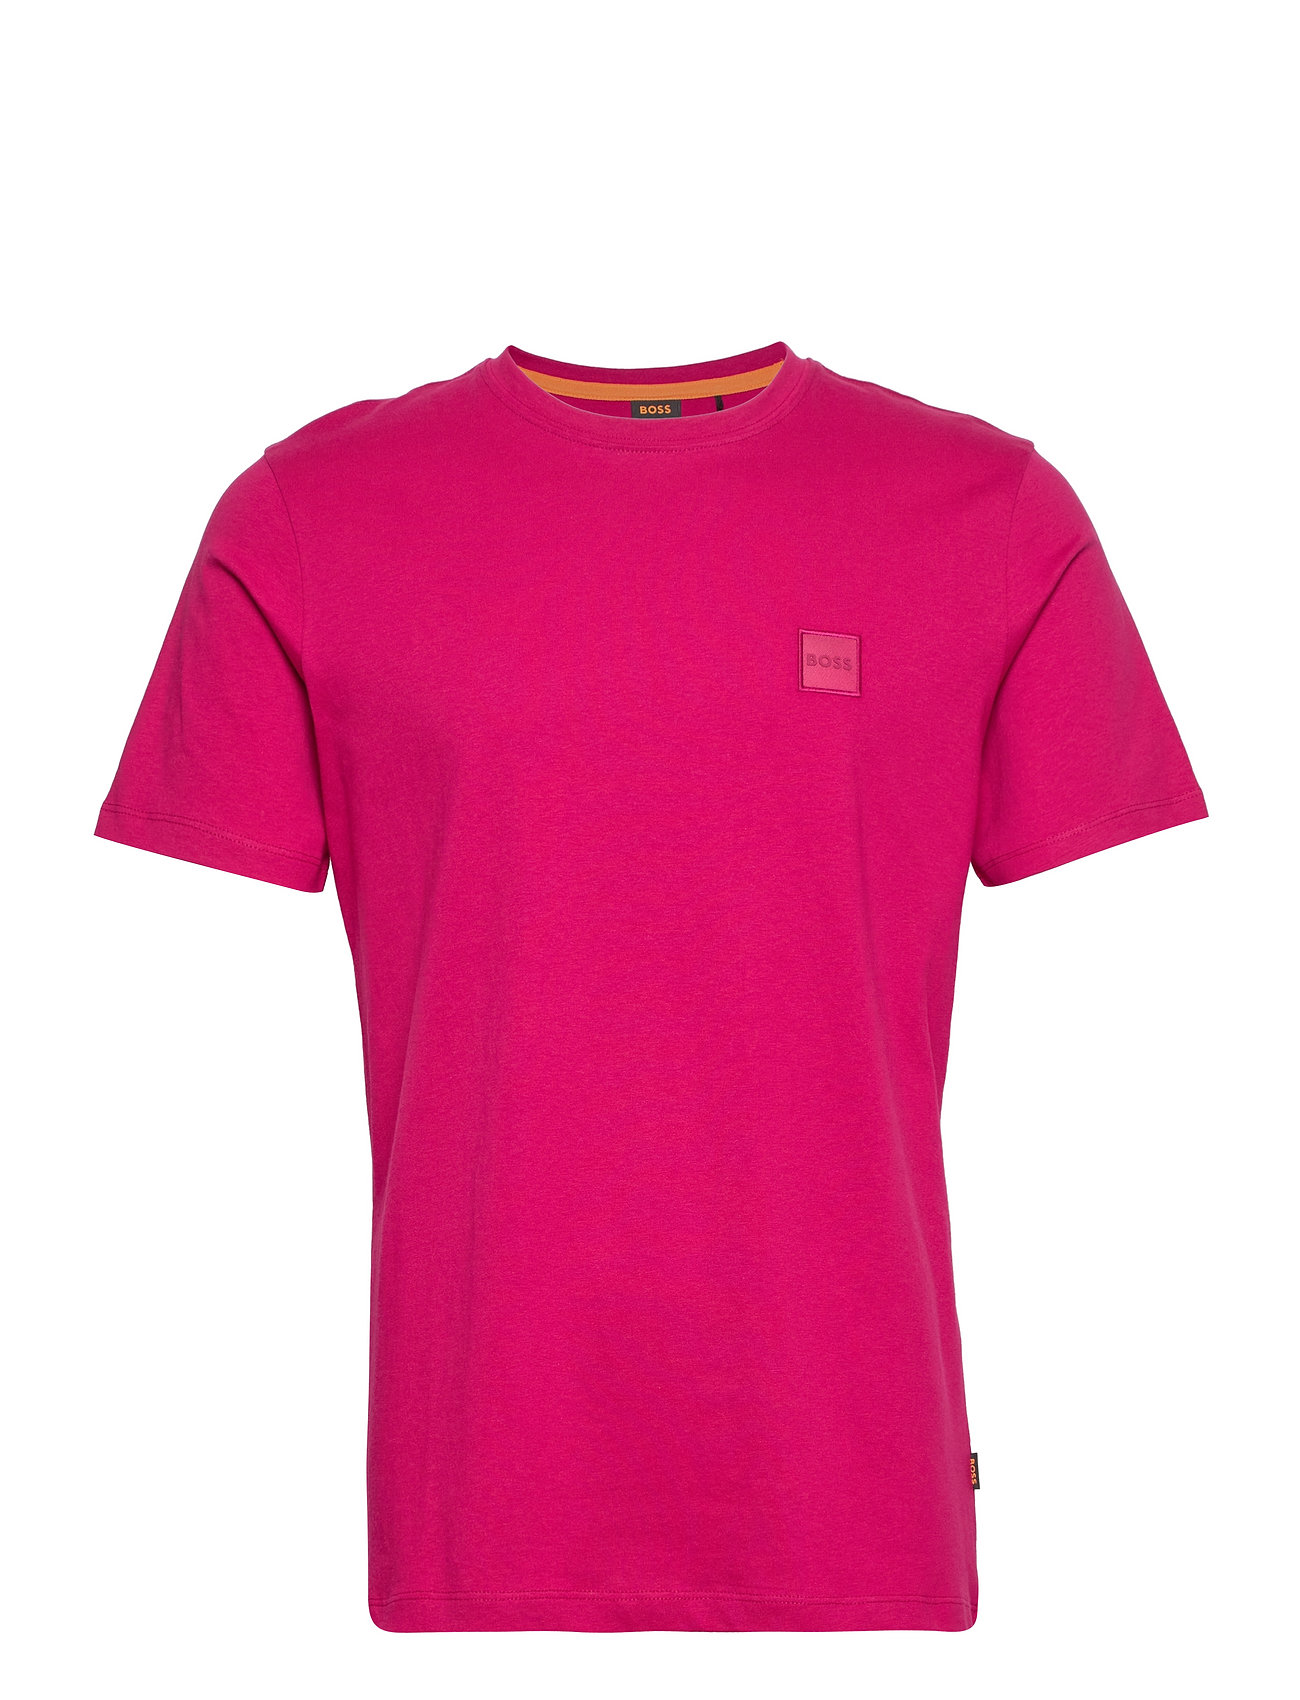 Tales T-shirts Short-sleeved Rosa BOSS